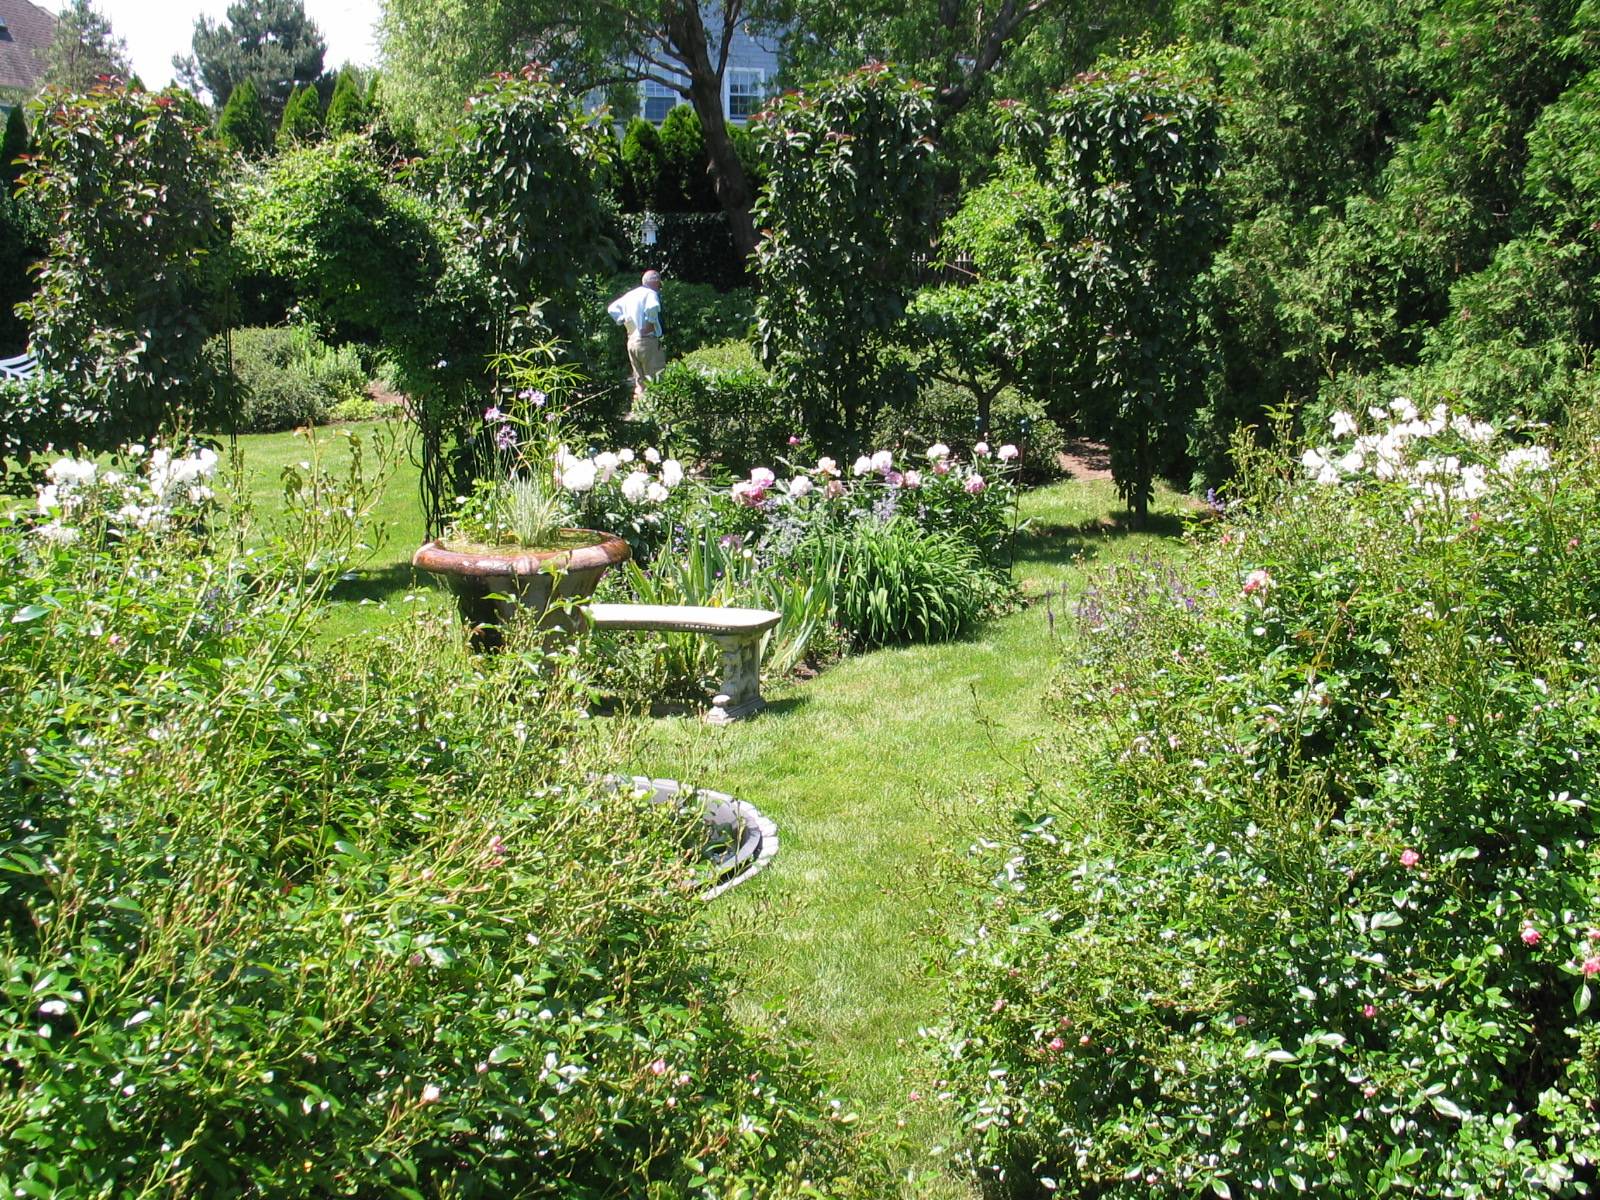 Beautiful Backyard And Garden Design Ideas